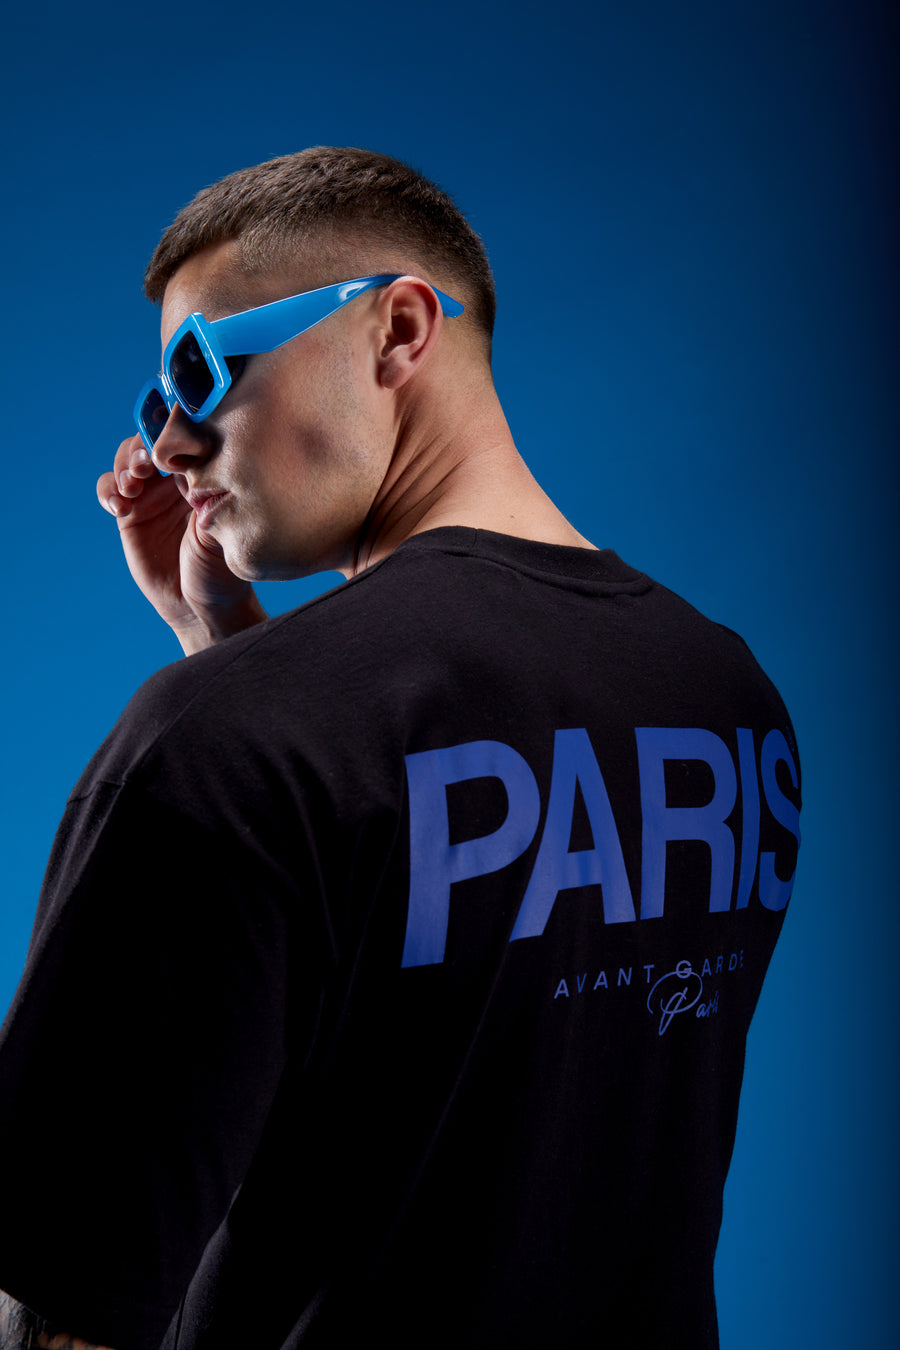 Parisien T-Shirt in Black